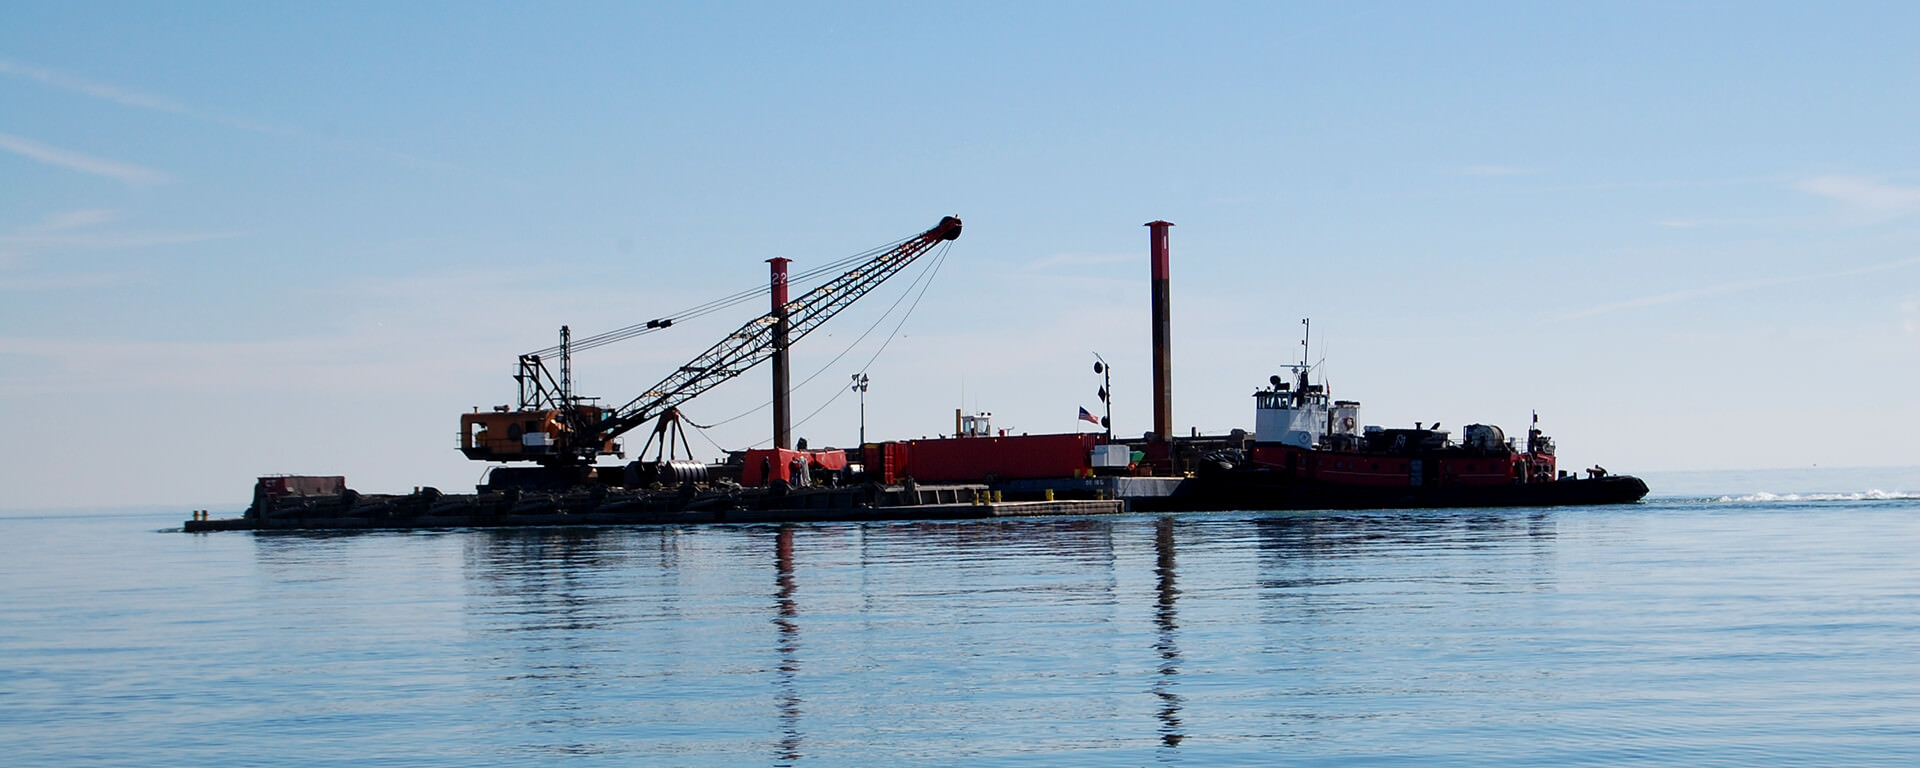 Ryba Marine Construction Co. on the Great Lakes